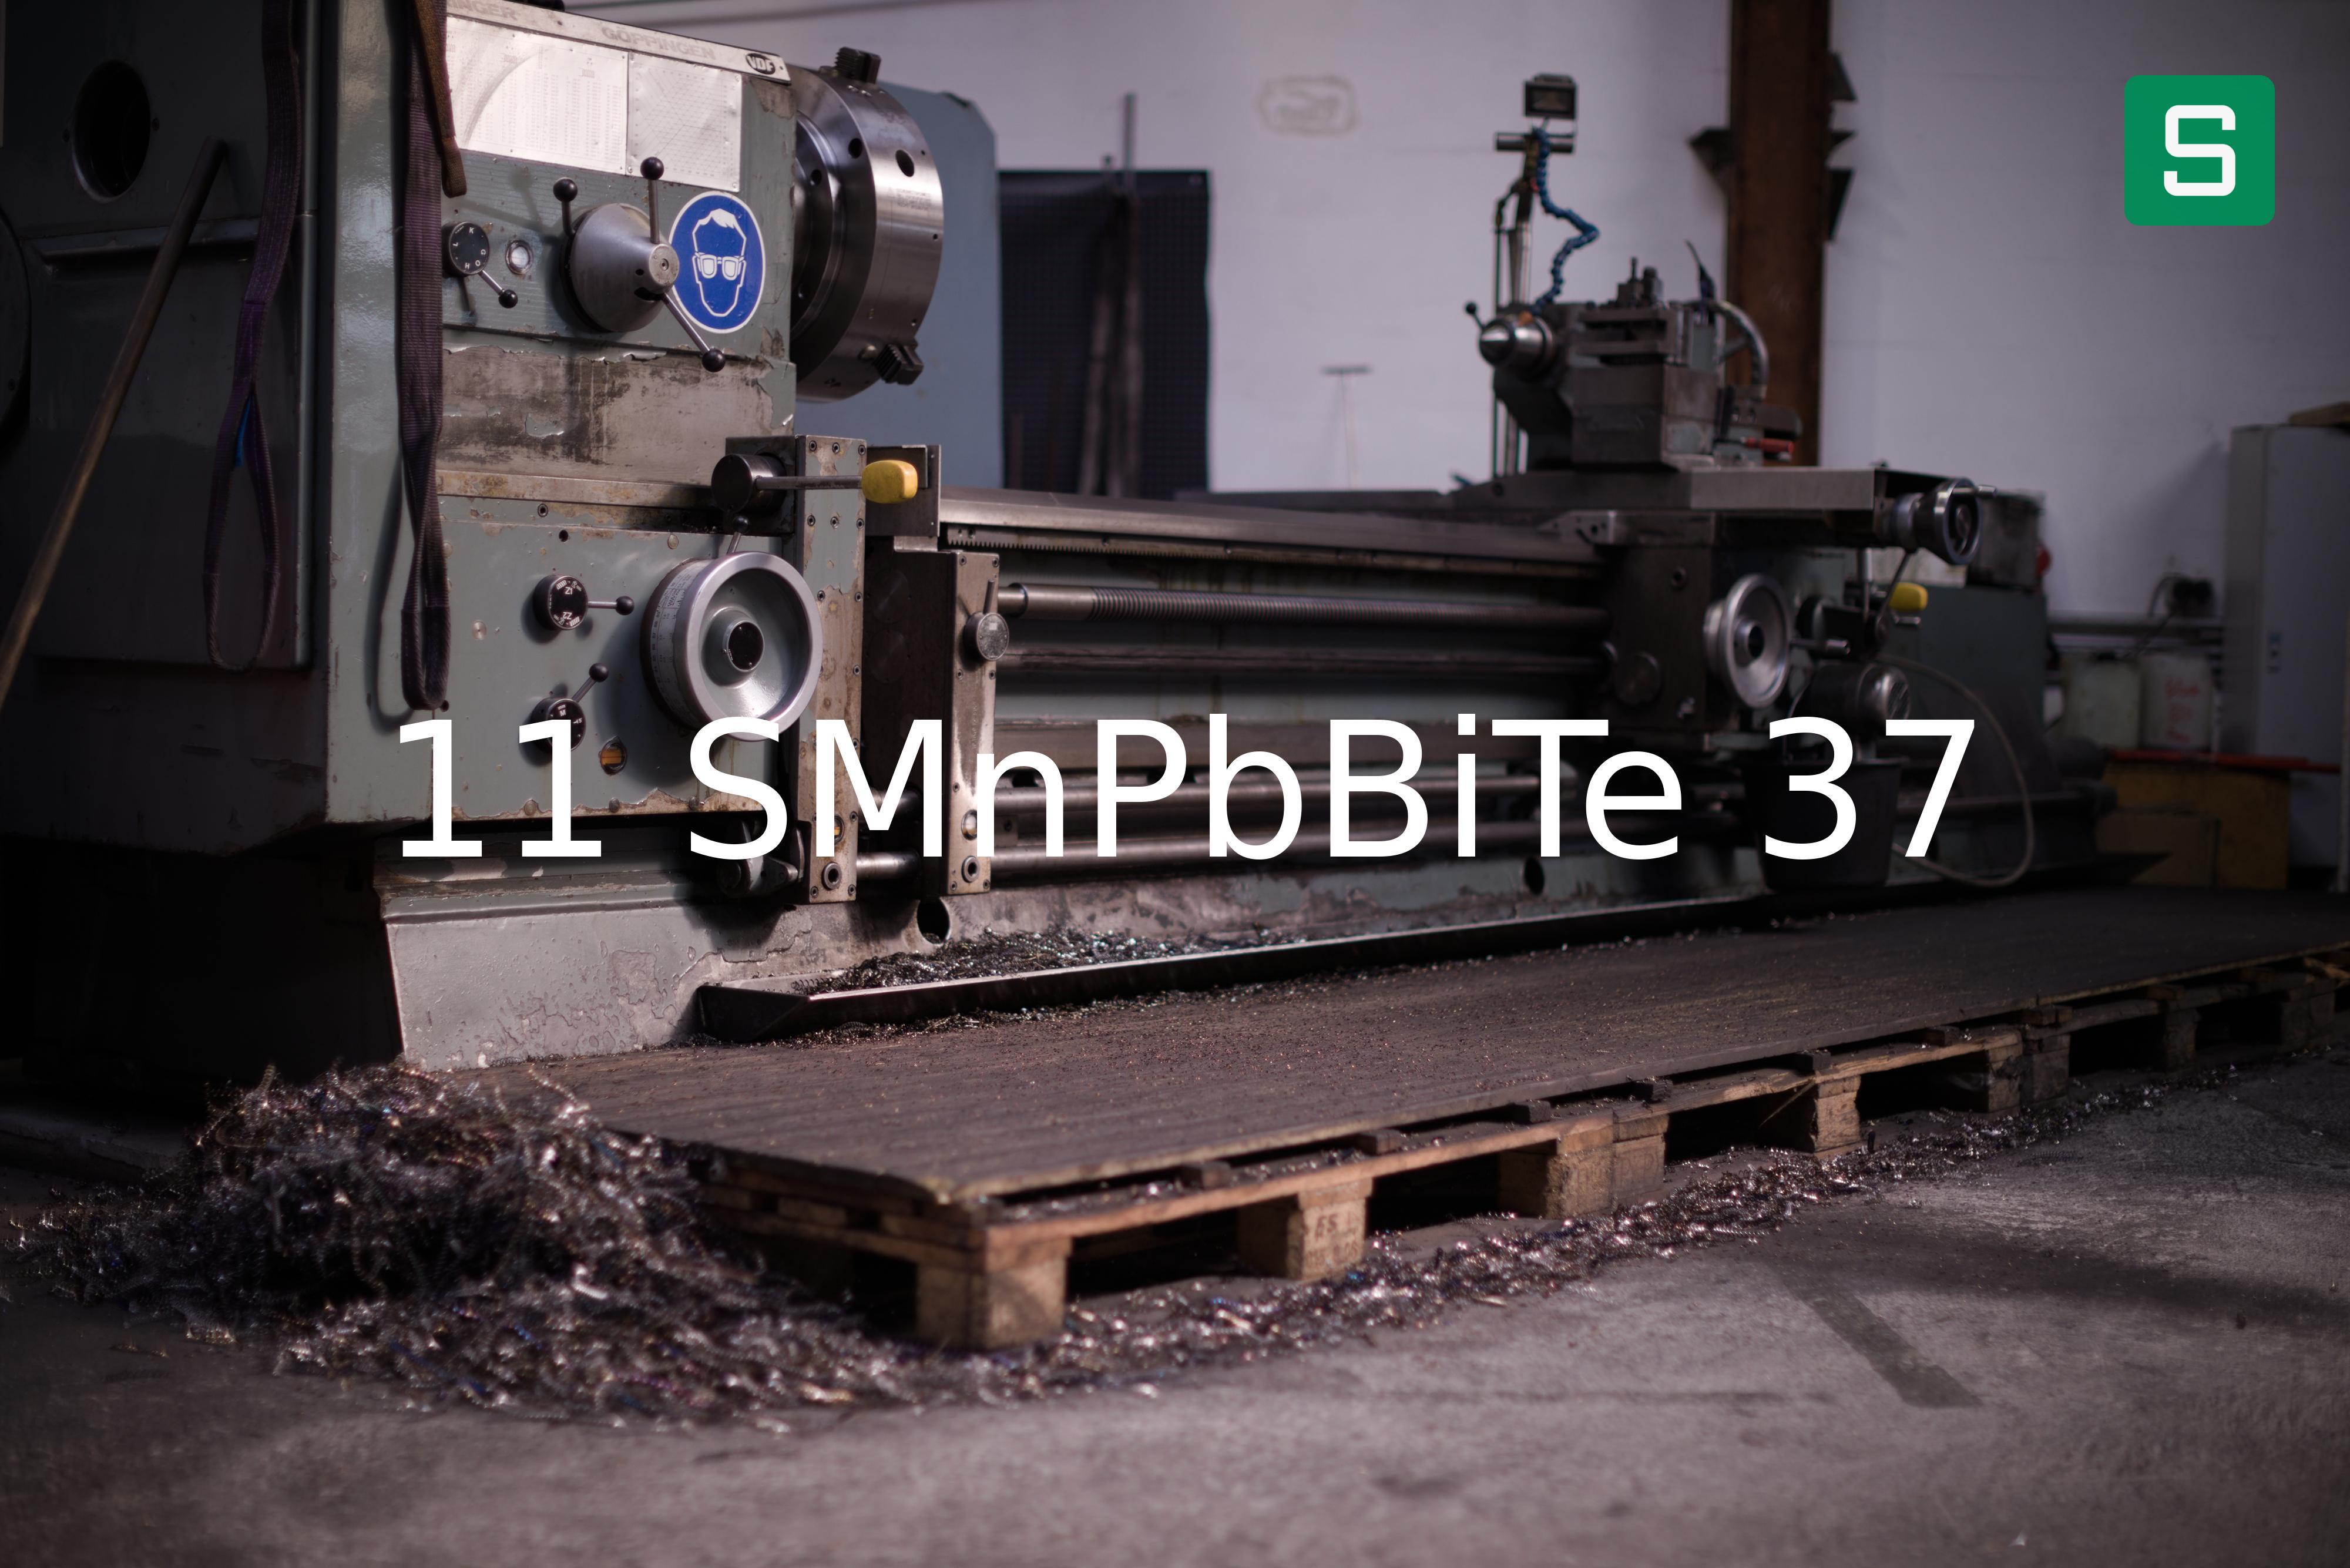 Steel Material: 11 SMnPbBiTe 37